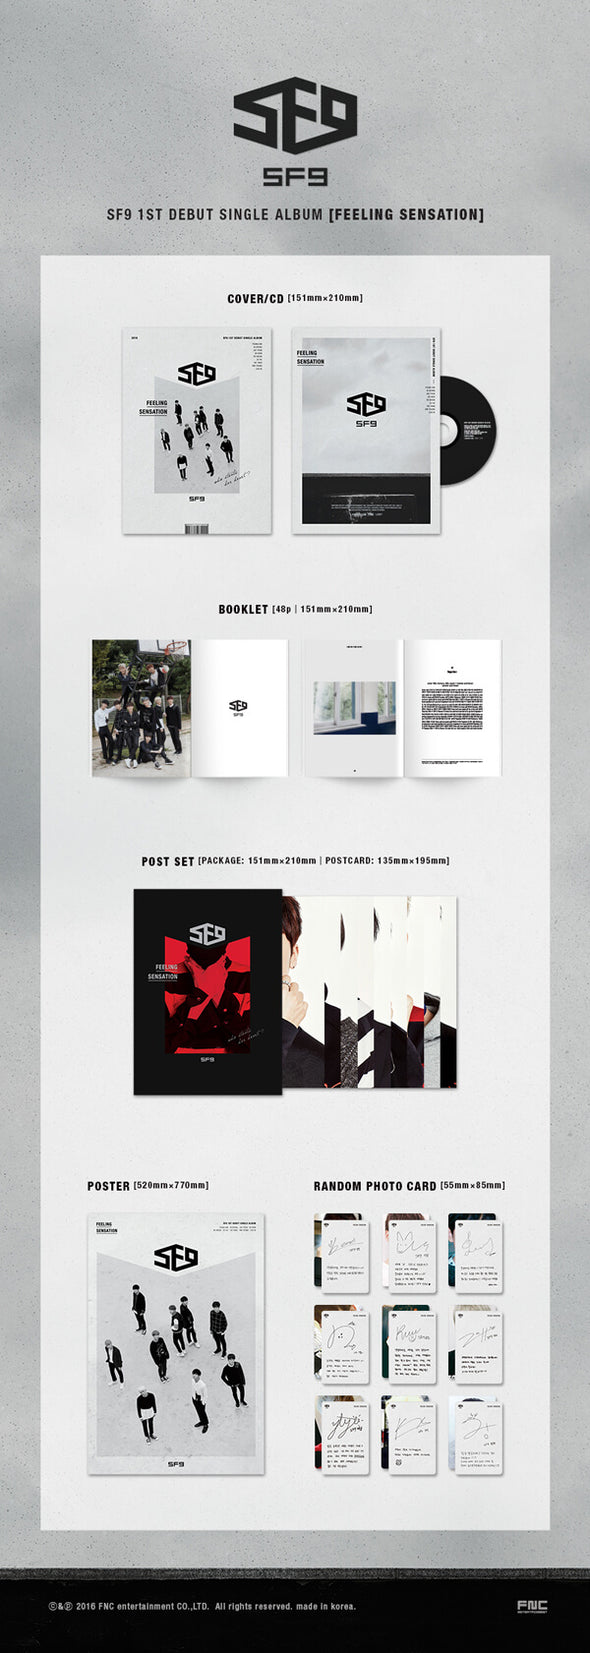 SF9 - 'FEELING SENSATION' 1st Debut Single Album